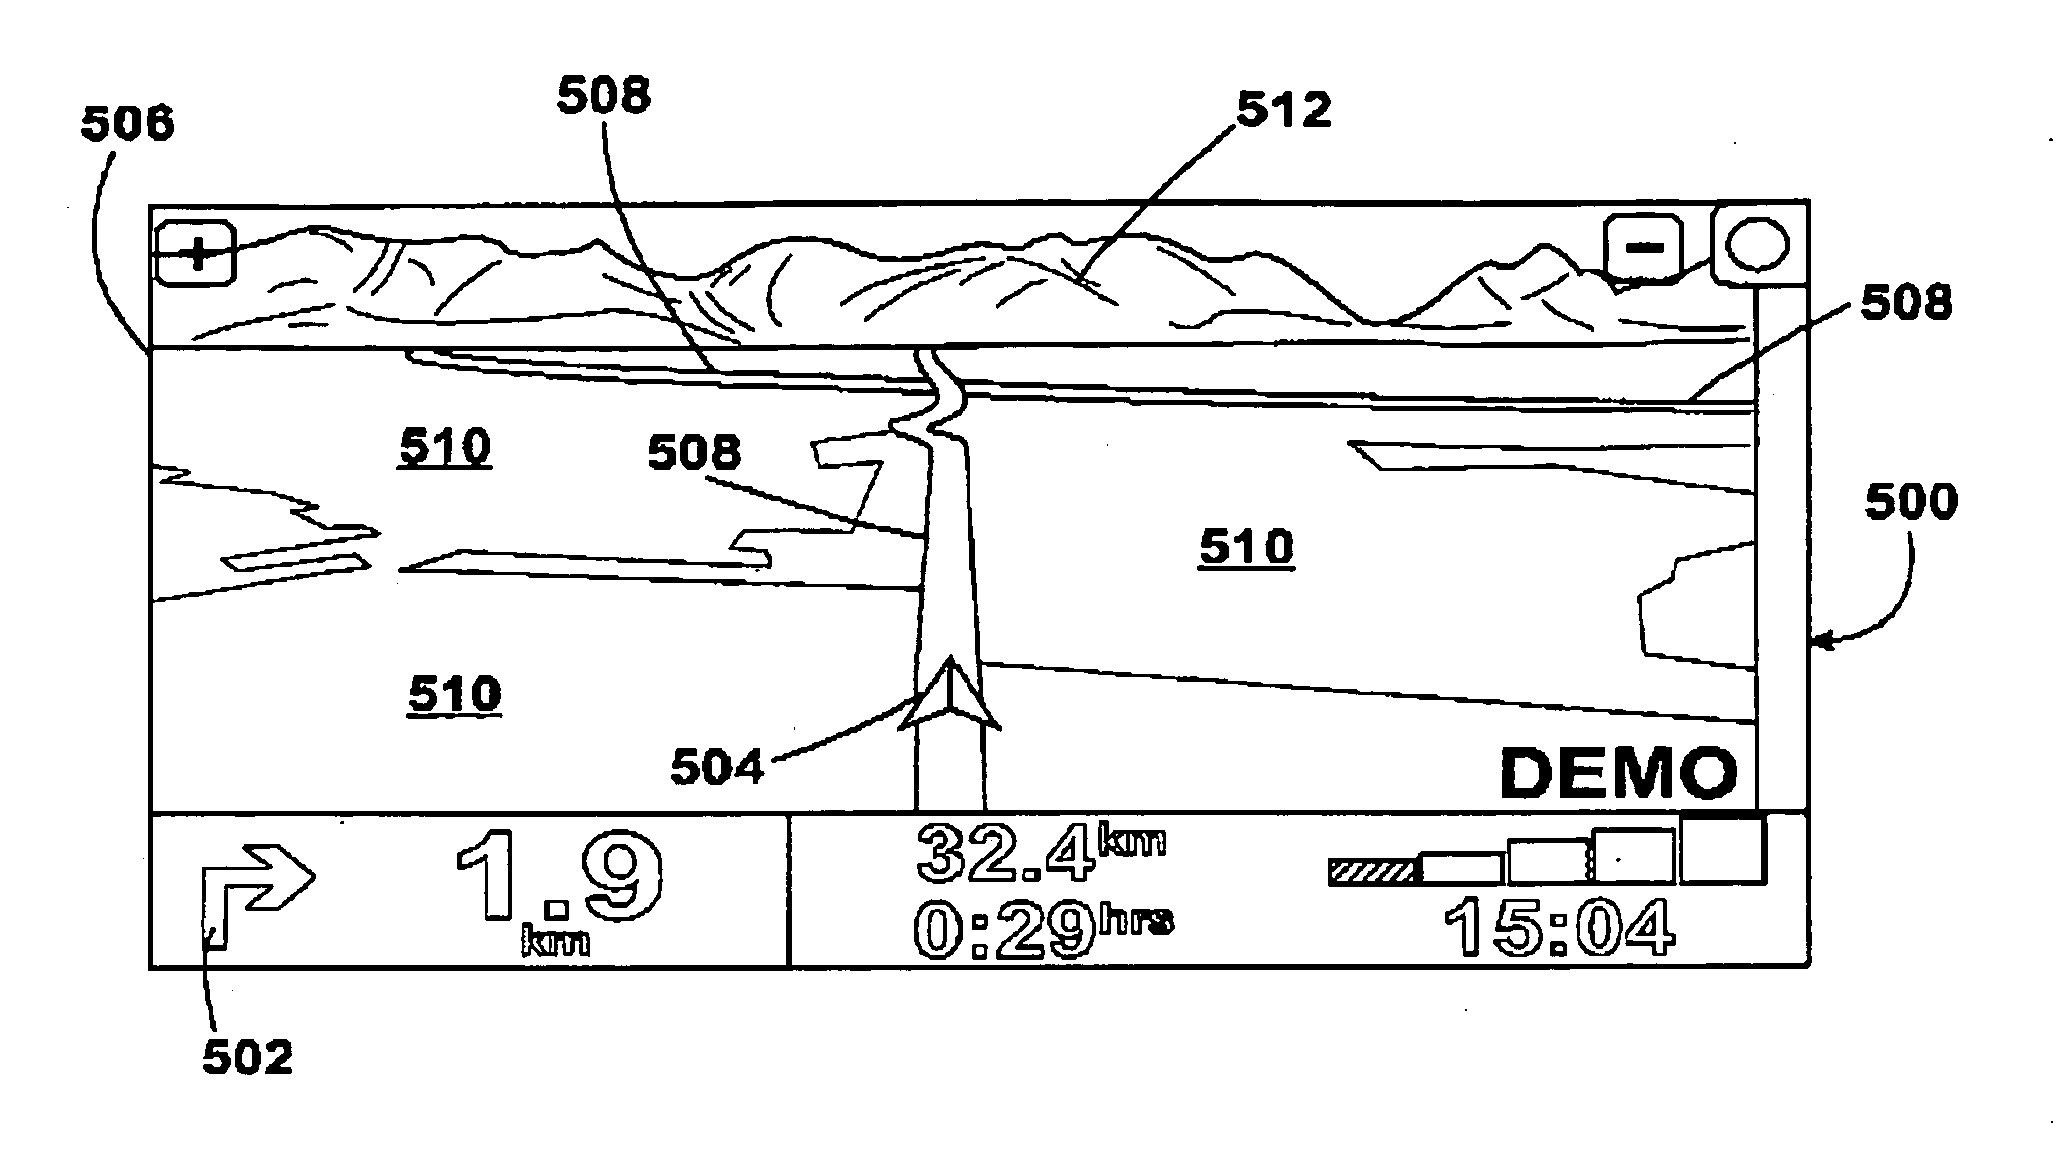 Navigation device and method